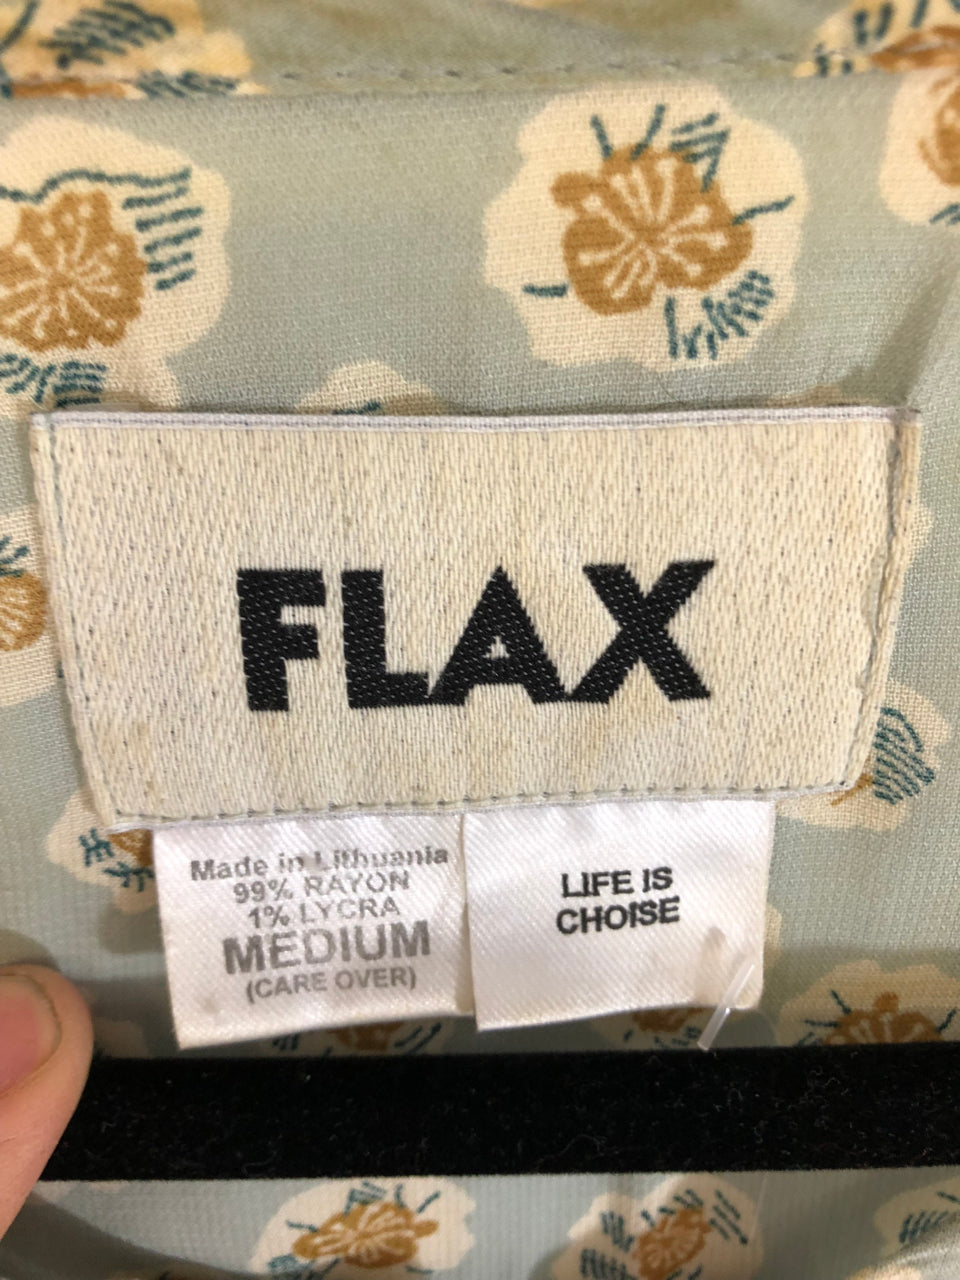 Flax Top